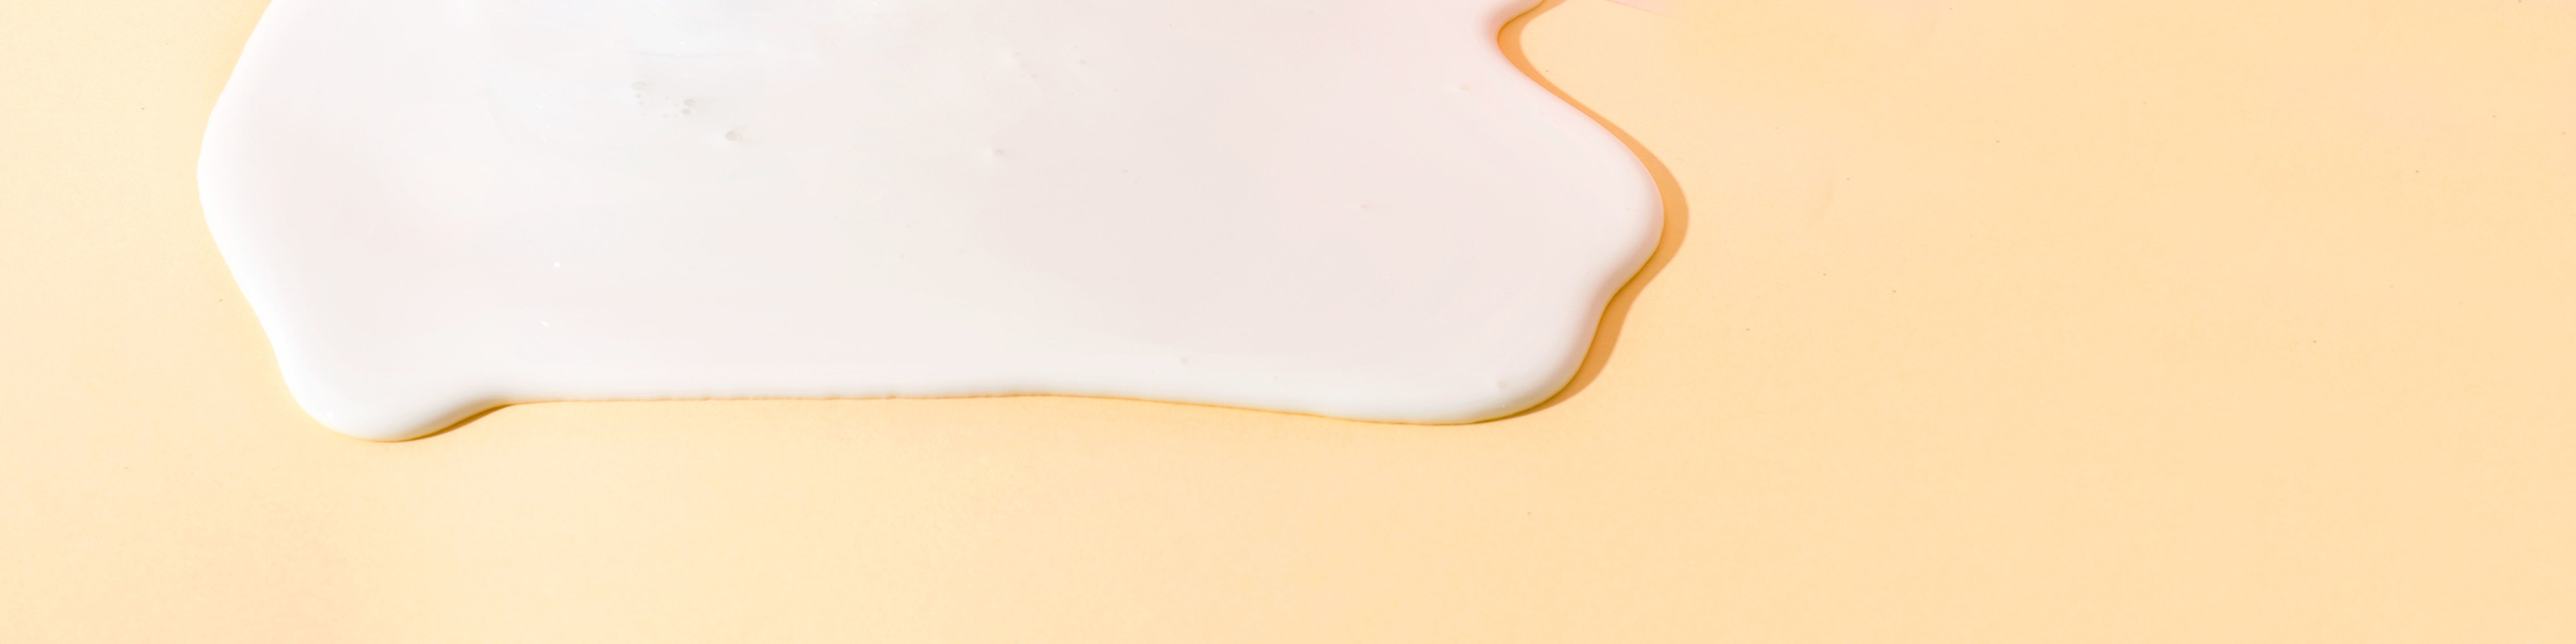 Closeup of calcium as a white liquid on a peach-colored background.